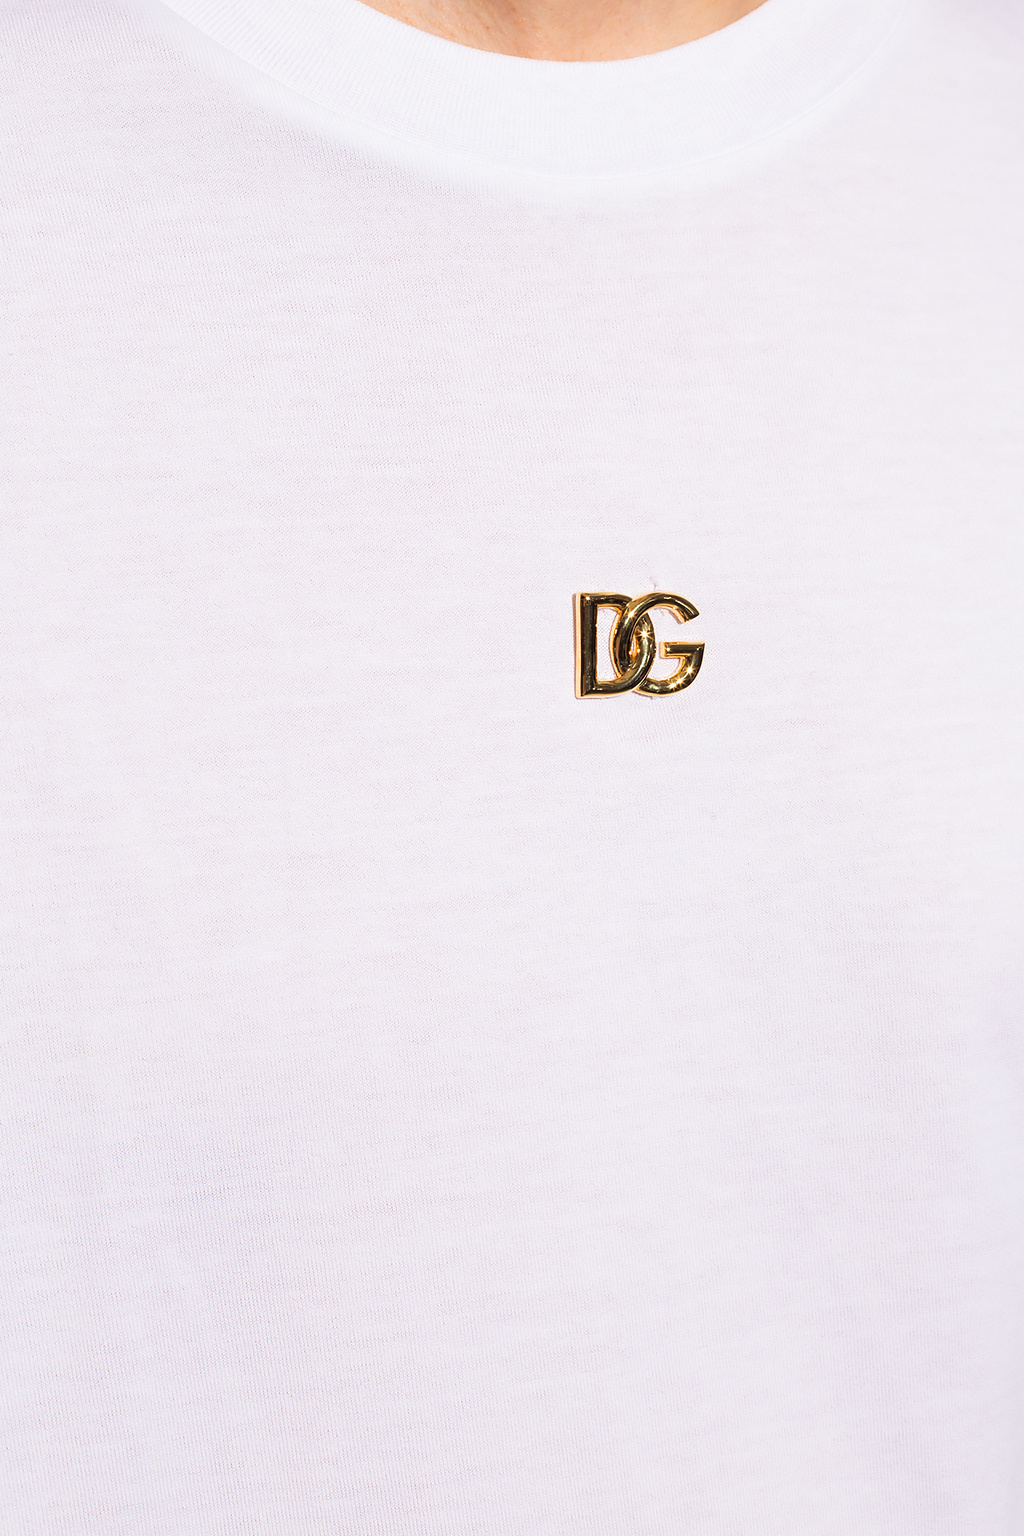 Dolce & Gabbana White Amor Cotton Crewneck Men's T-shirt - 44 IT